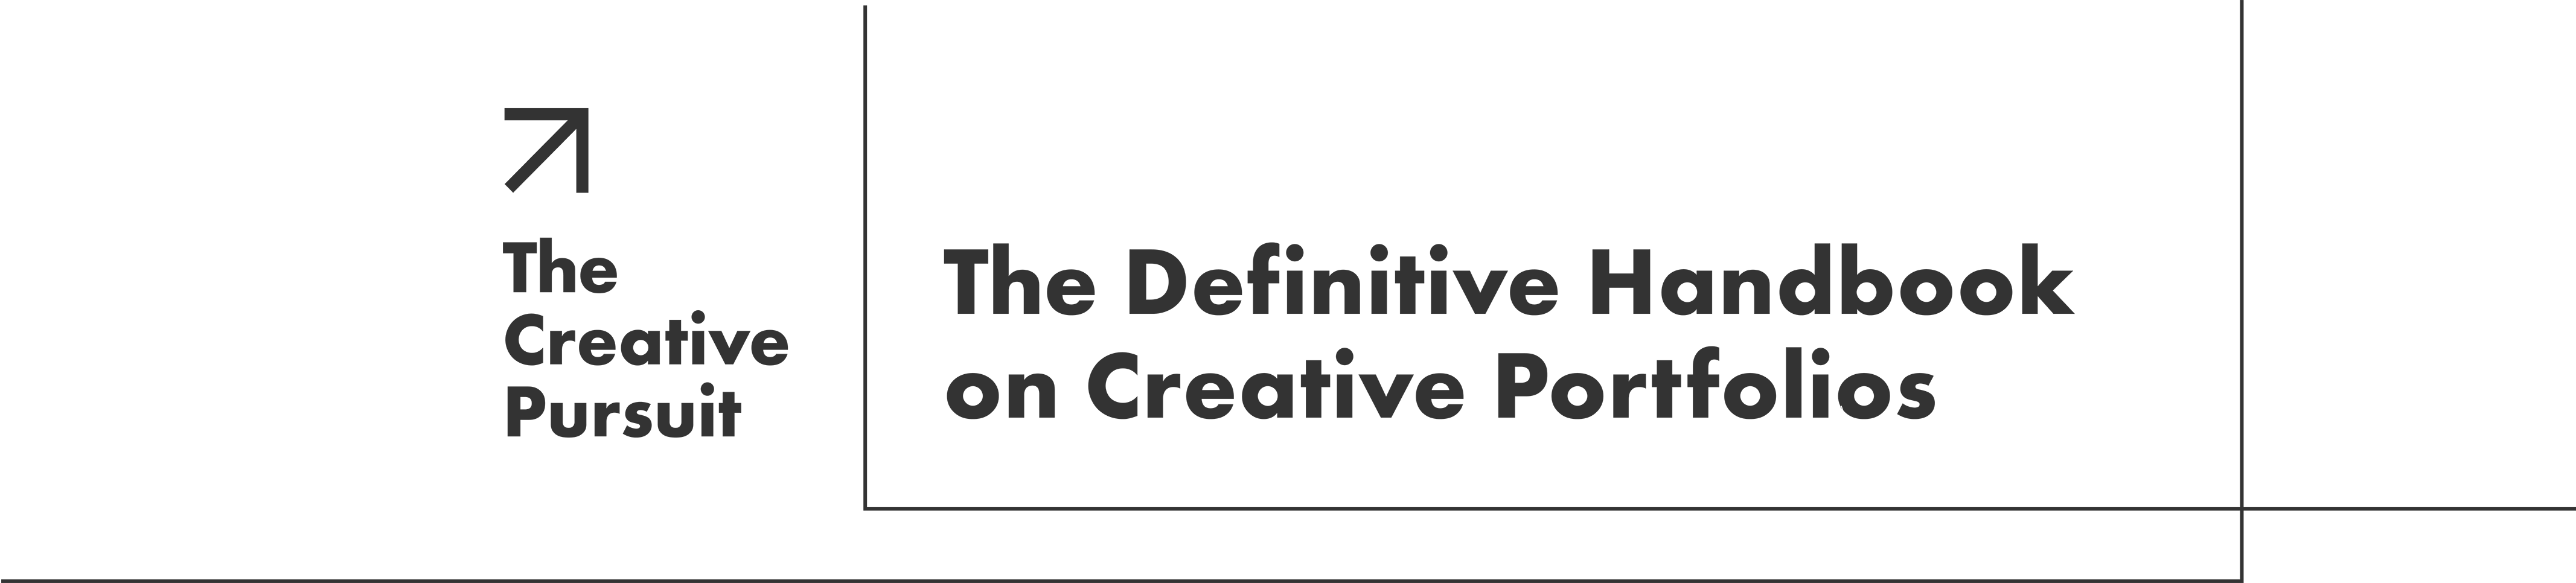 creative writing portfolio title ideas